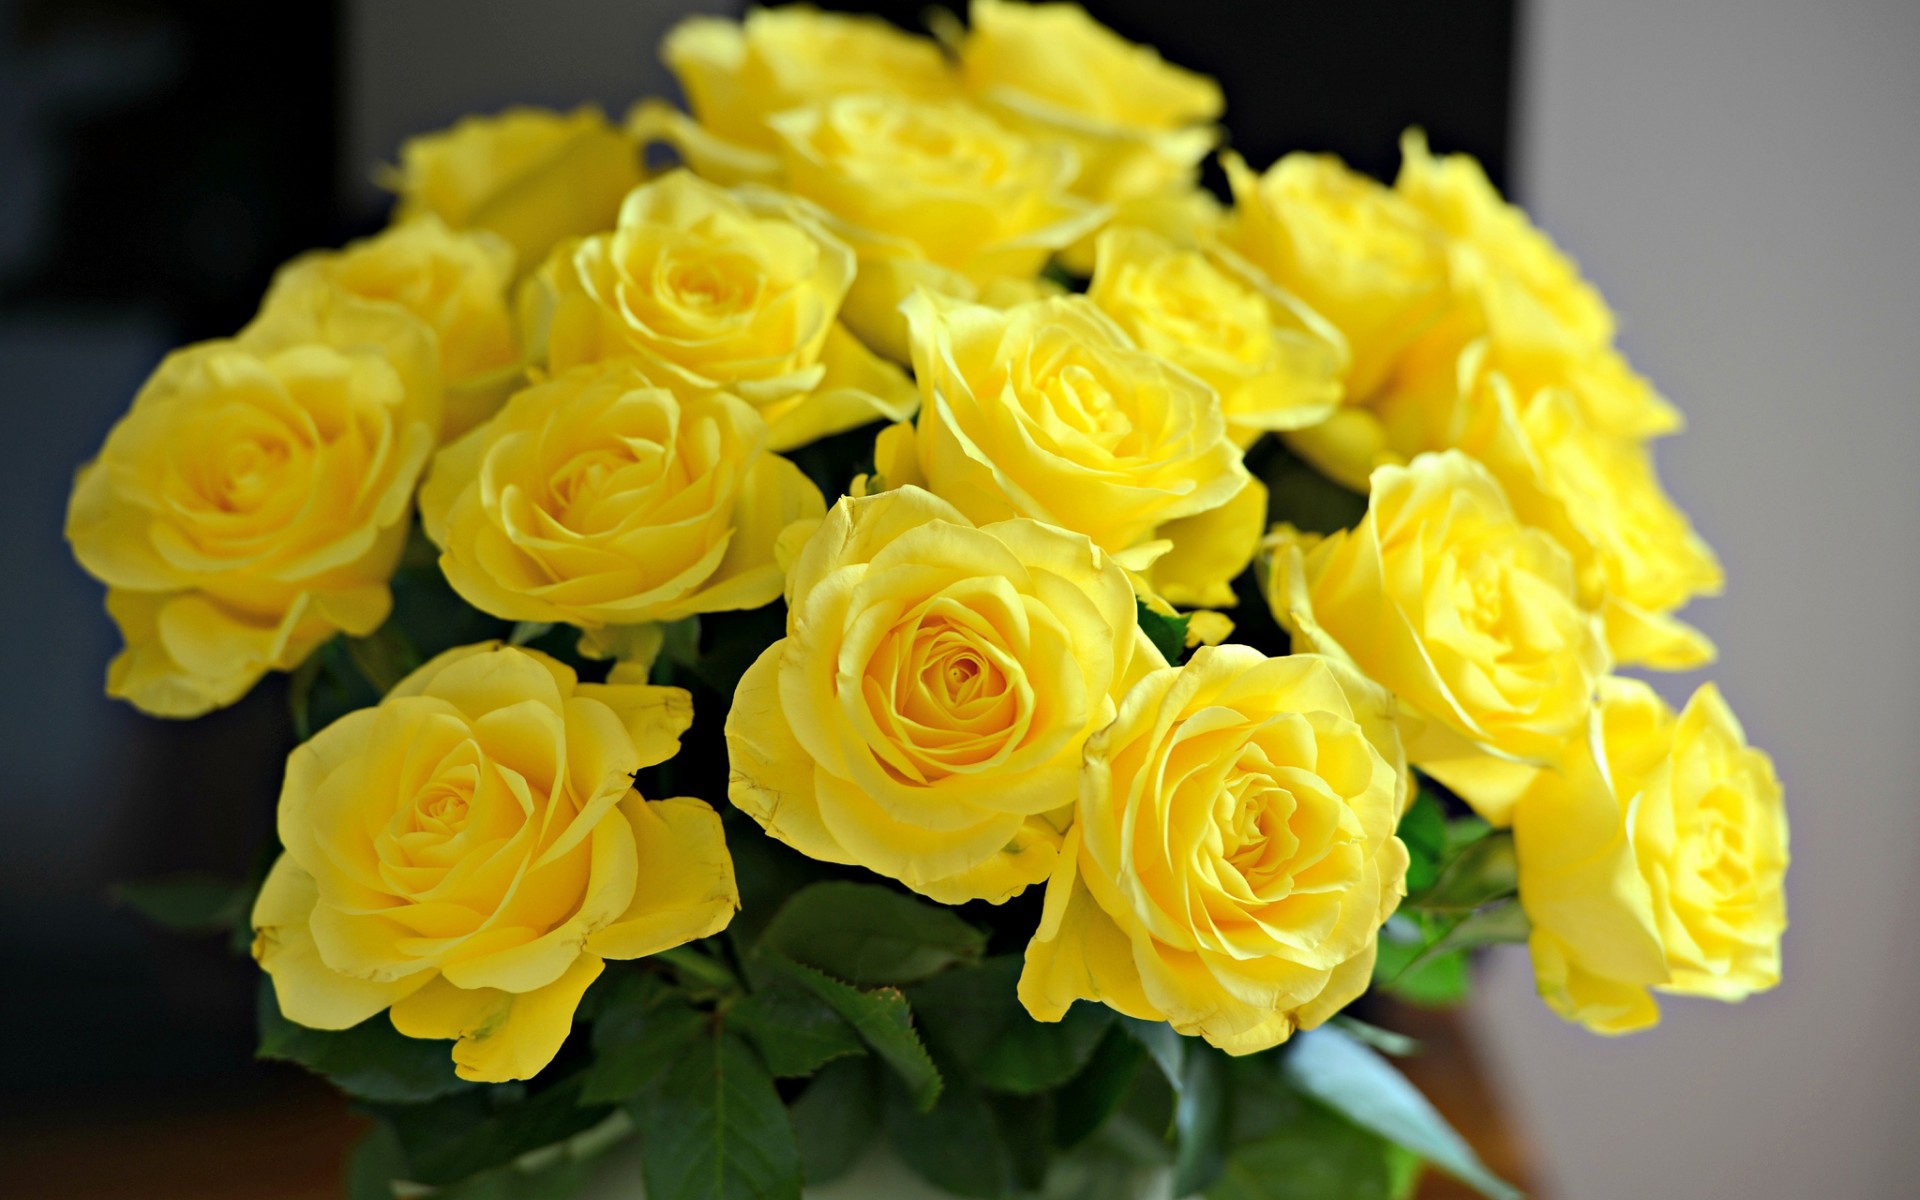 beautiful pictures of roses for wallpaper,flower,rose,flowering plant,julia child rose,garden roses